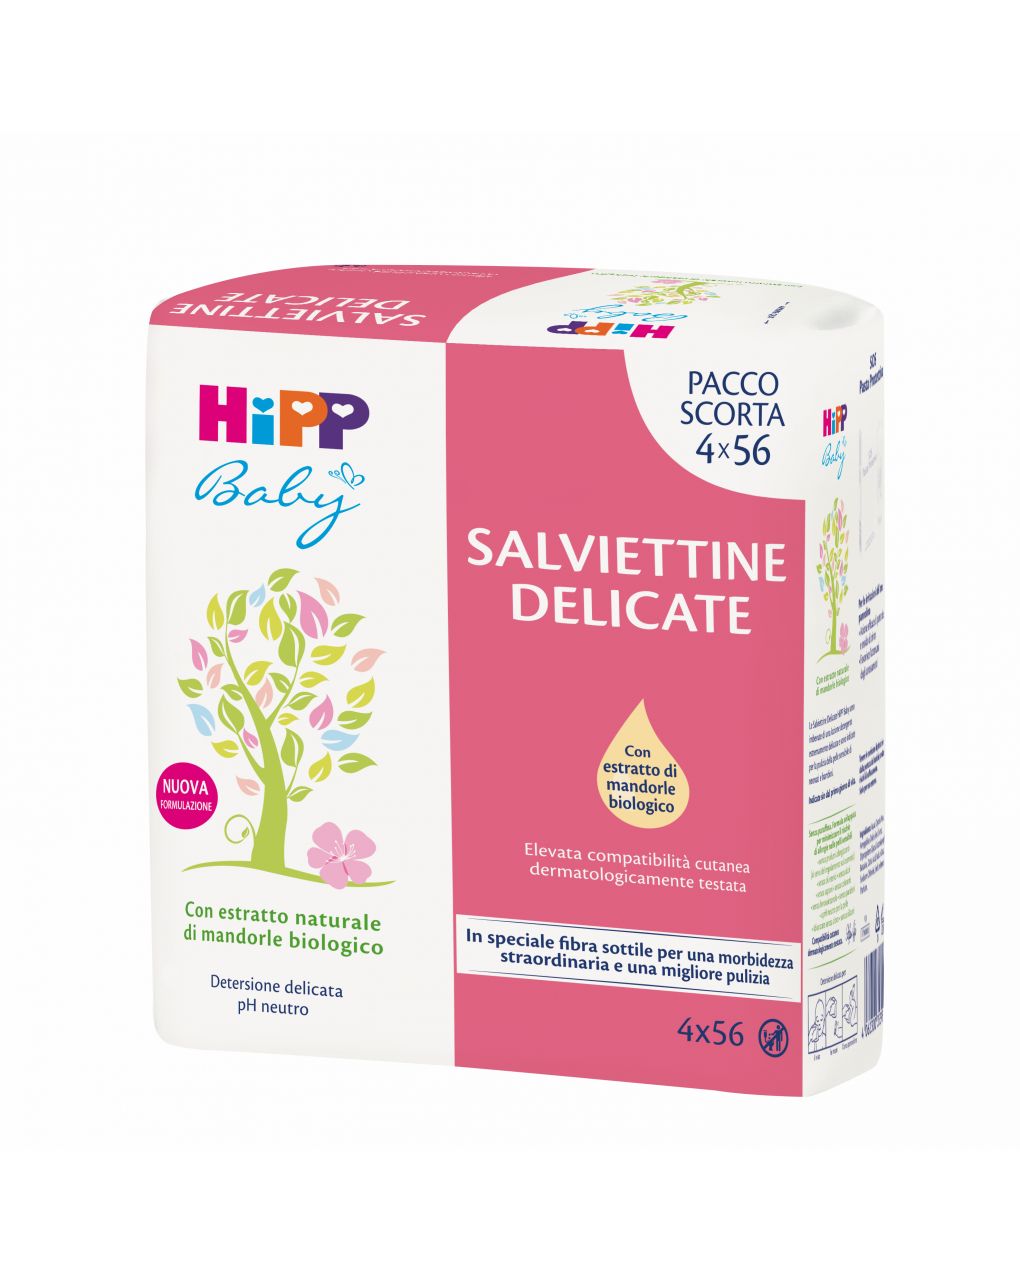 Salviettine delicate pacco scorta 4x56 pezzi - Hipp